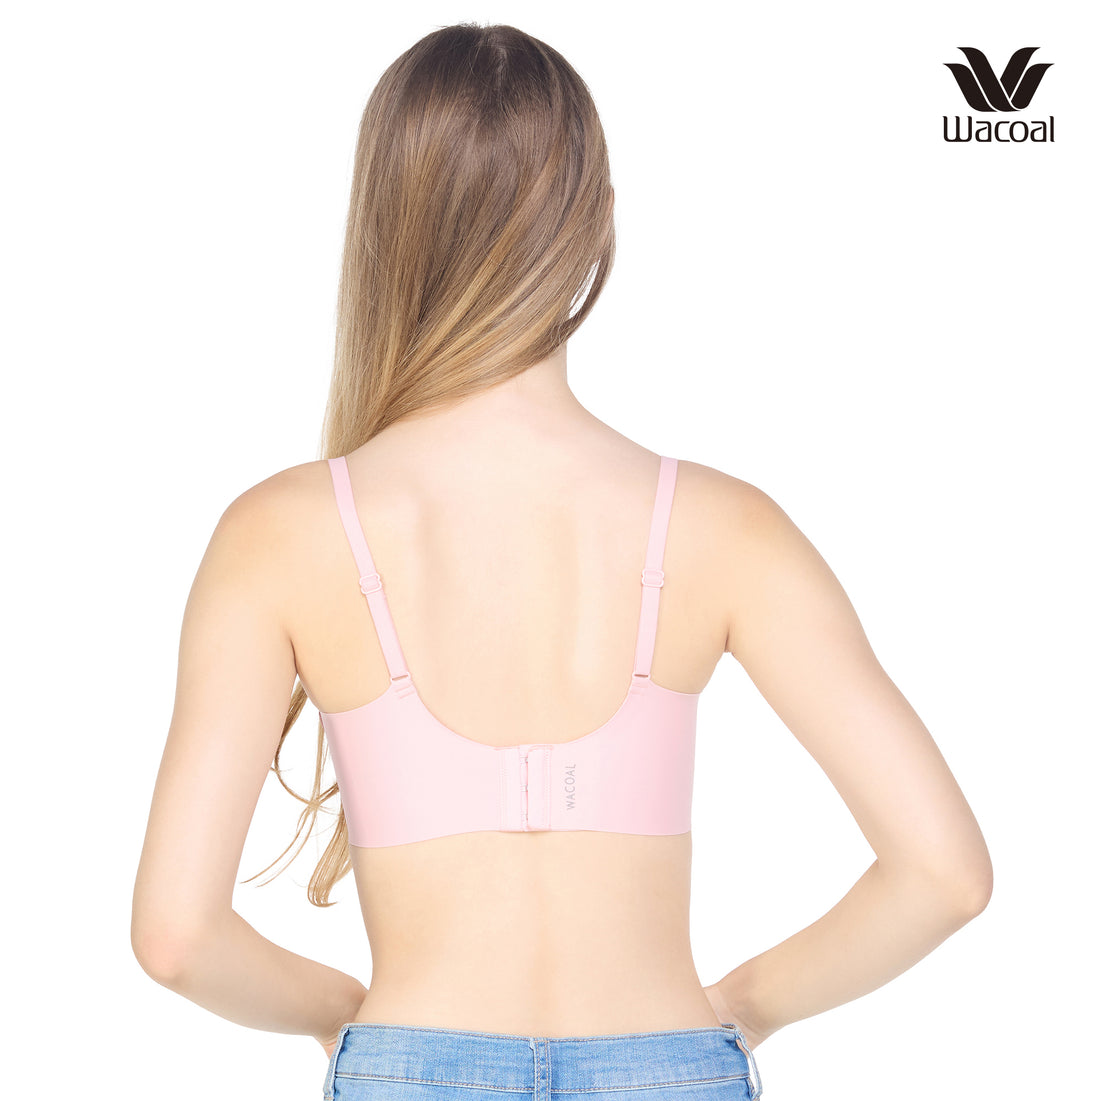 Wacoal Go Girls Smart Size Sexy Look Wacoal wireless bra, model WB3Y37, light pink, graphic pattern (OR)